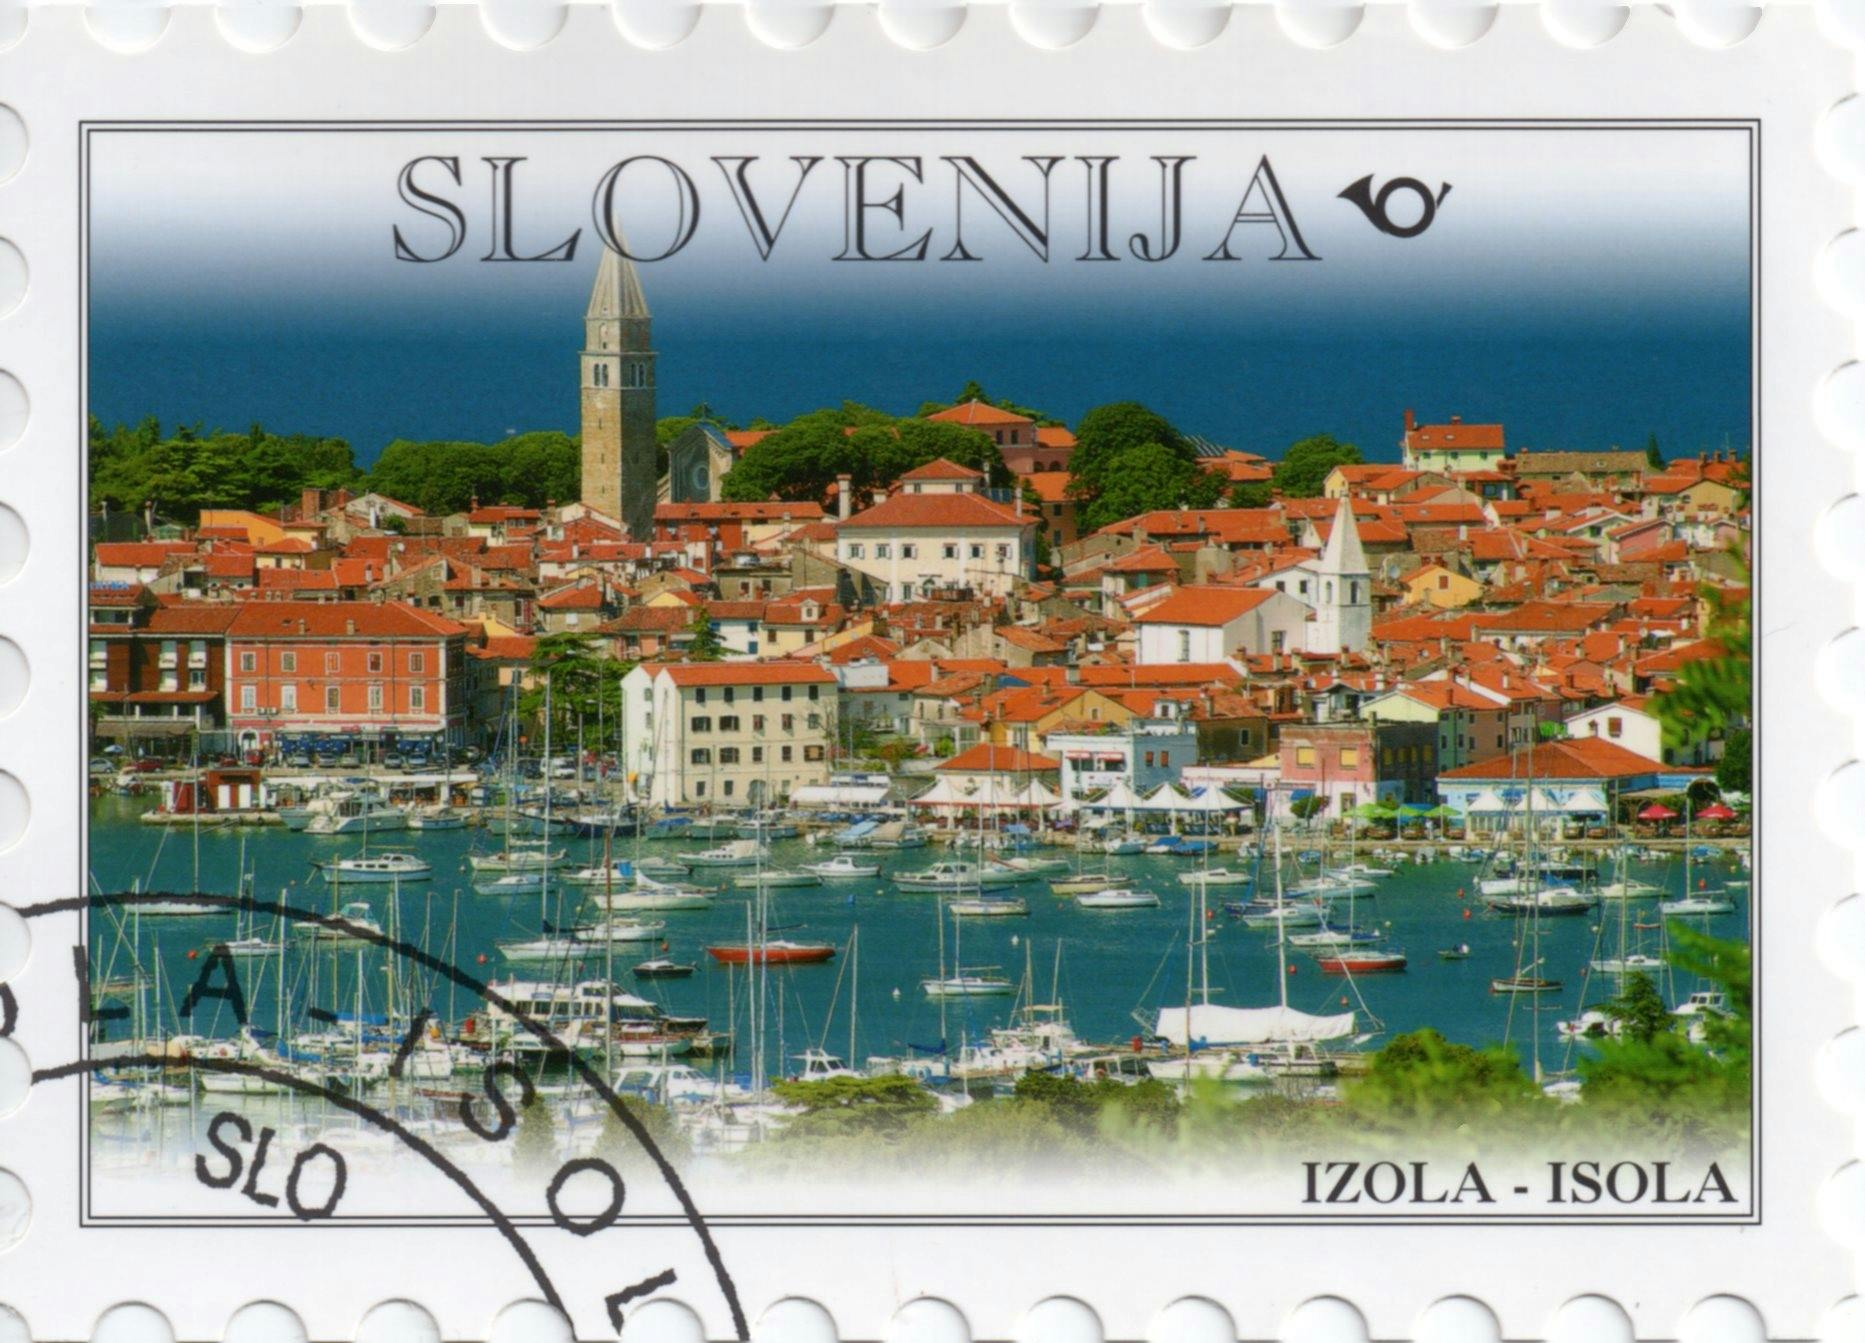 Slovenia card front 0